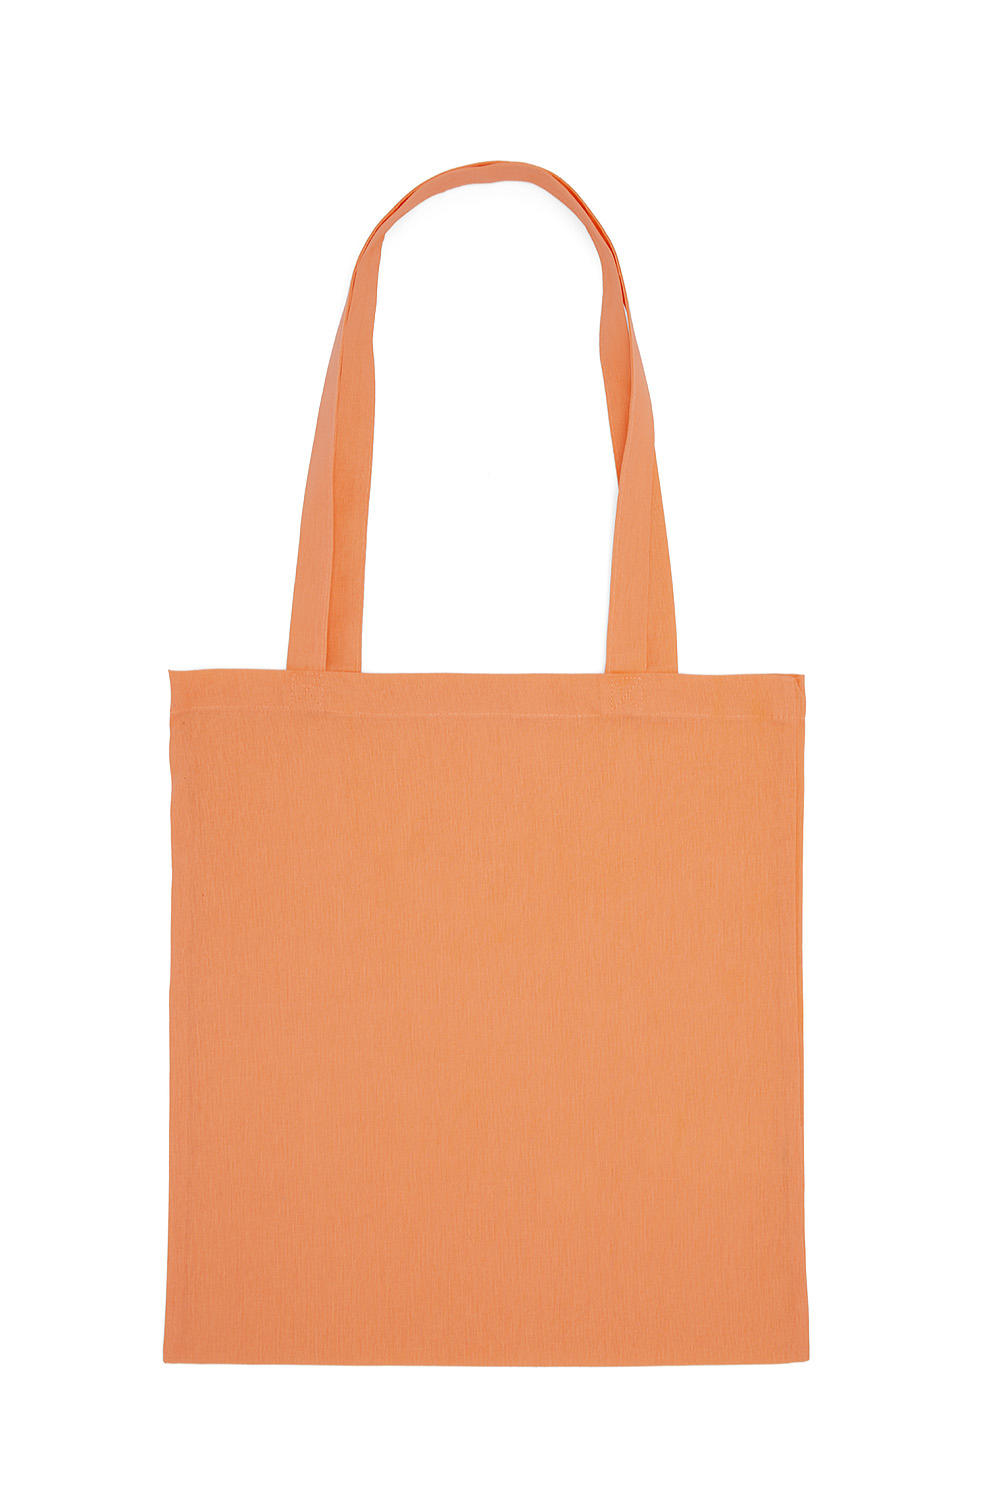  Cotton Bag LH in Farbe Cantaloupe